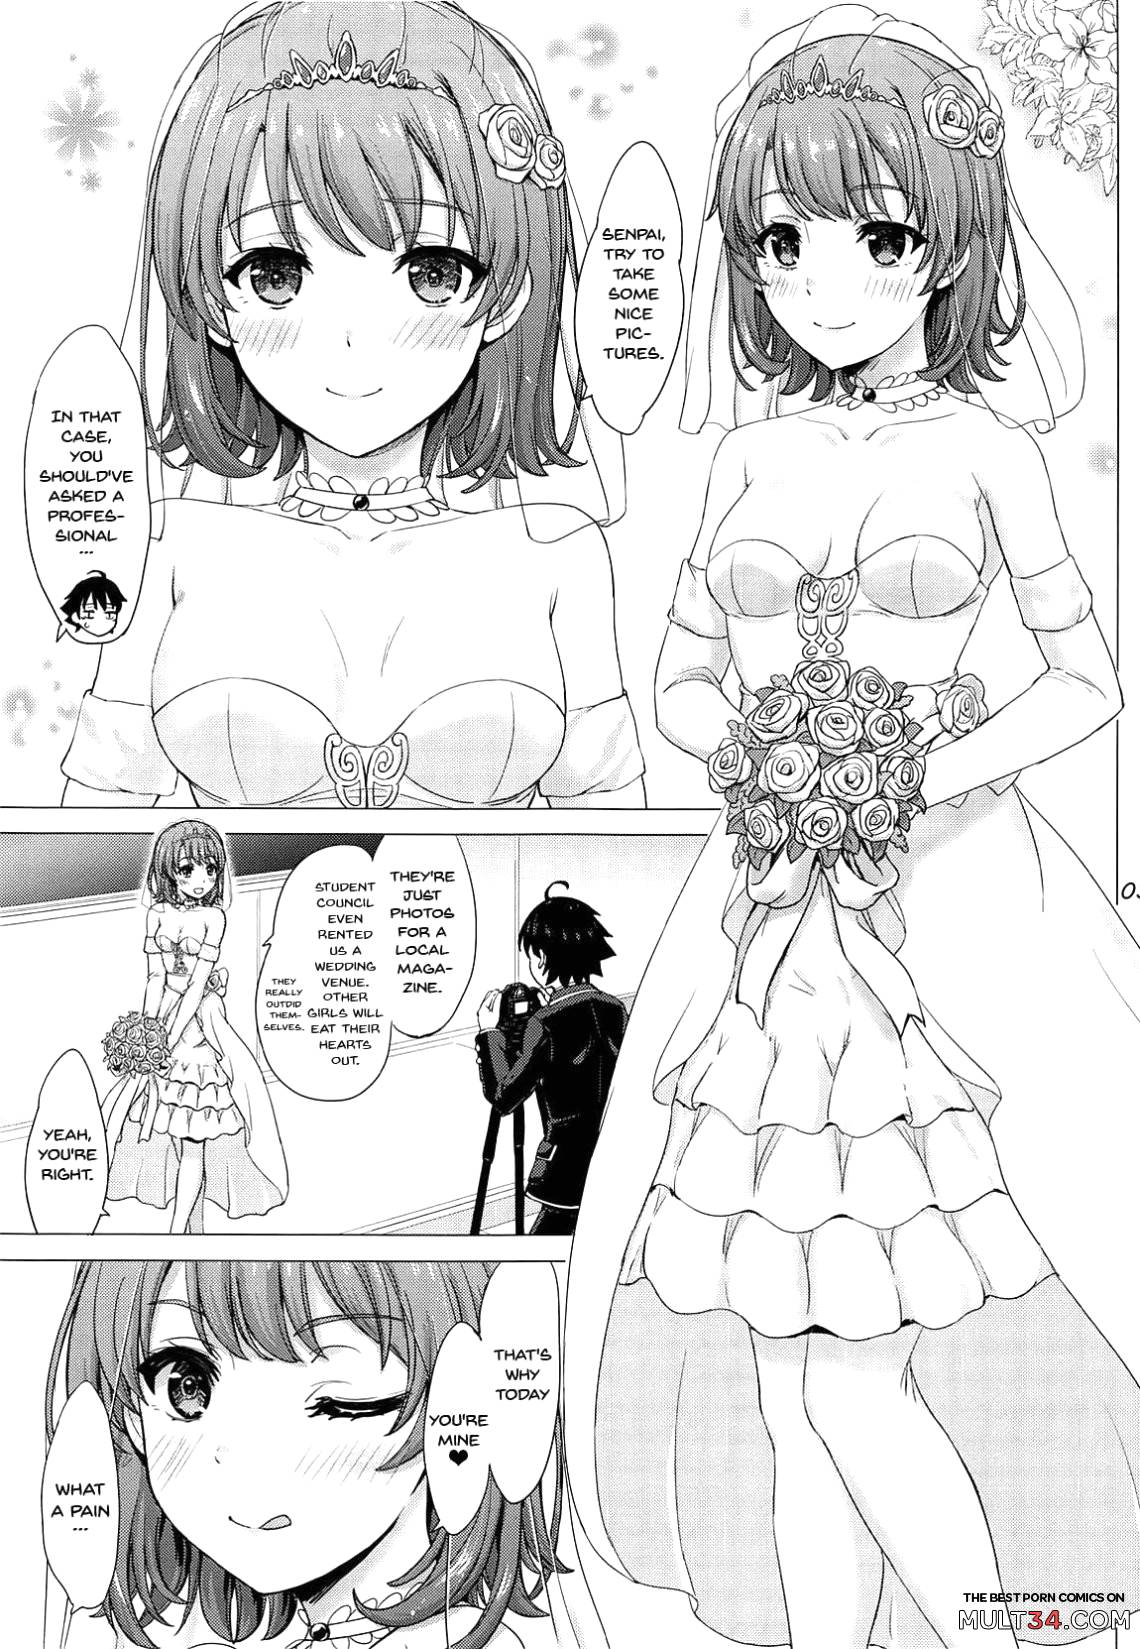 Wedding Irohasu! - Iroha's gonna marry you after today's scholl! page 2